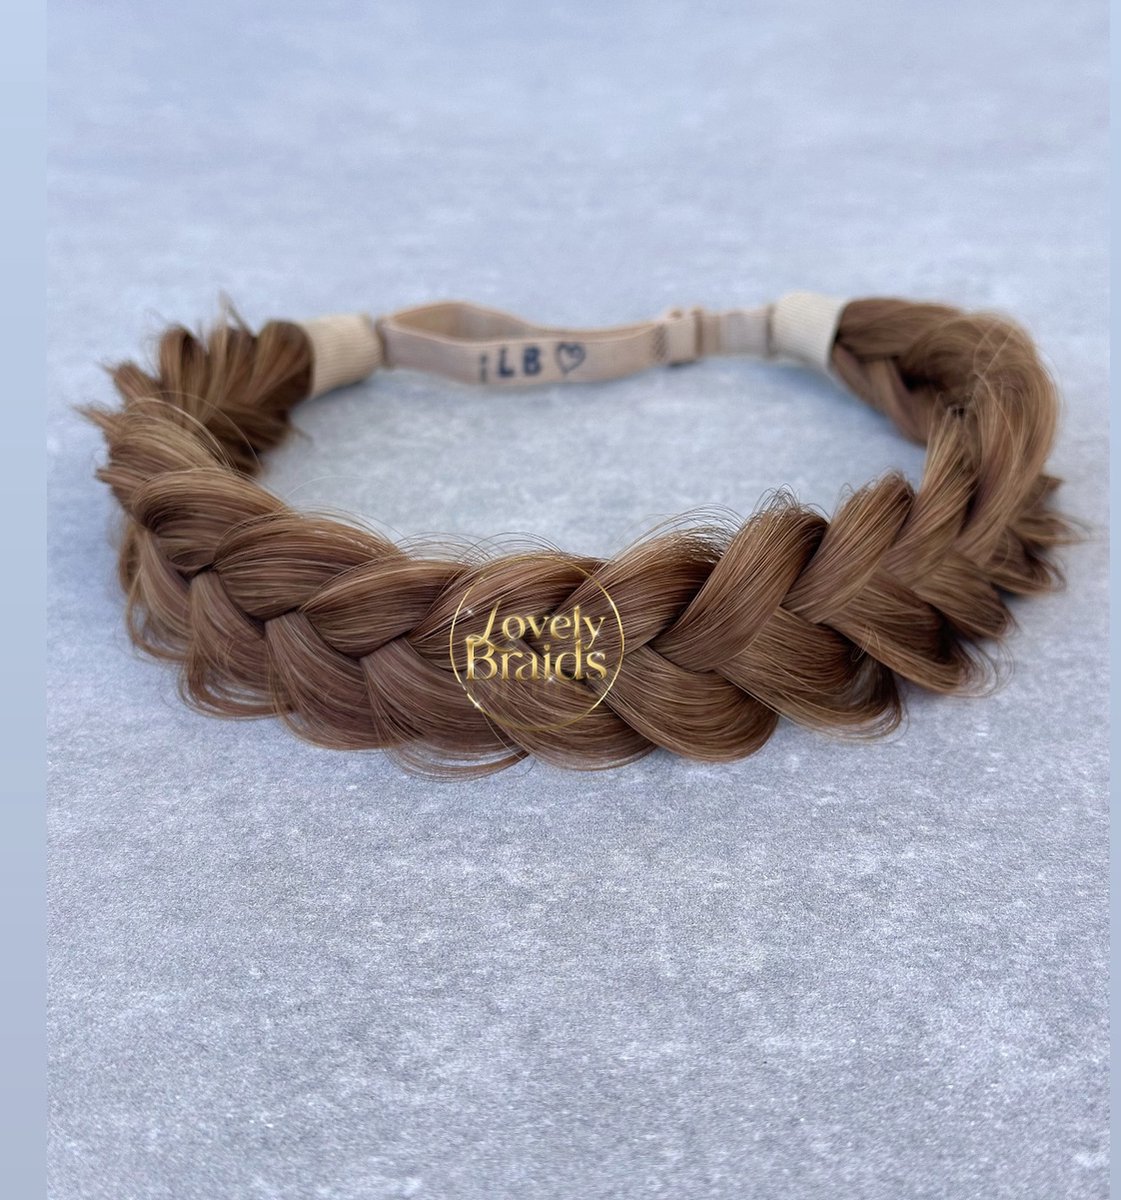 Lovely braids - copper caramel- gevlochten haarband - vlecht haarband - haarband vlecht